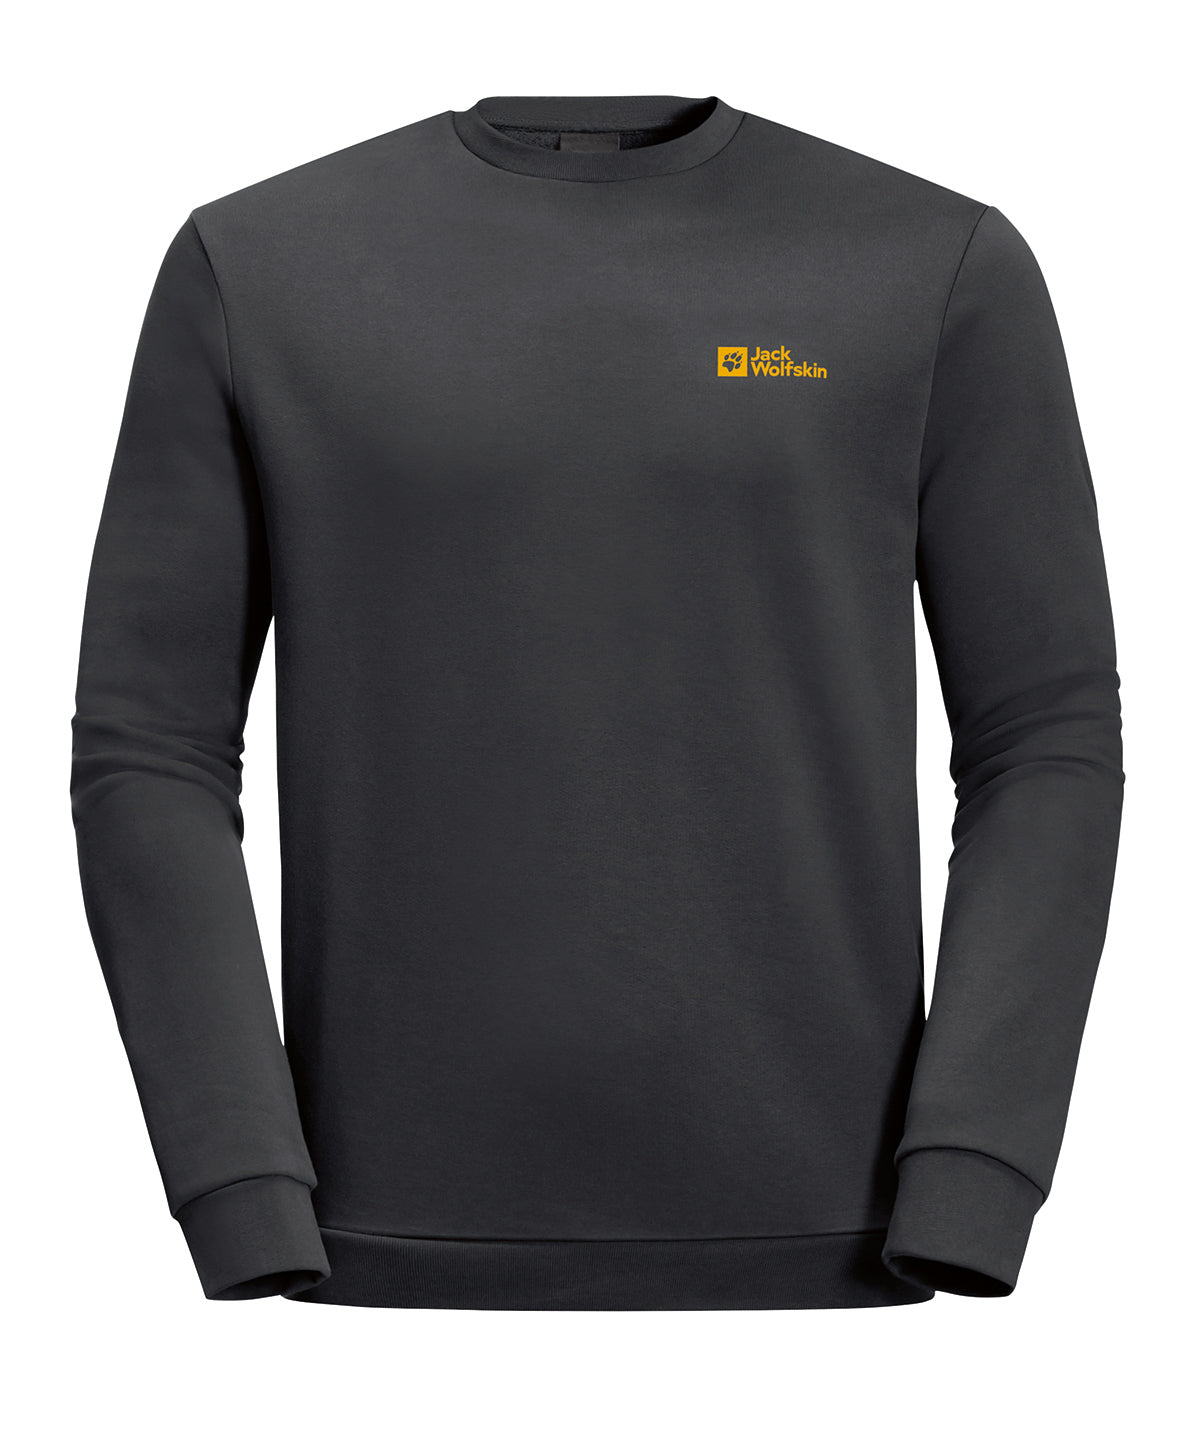 Personalised Sweatshirts - Black Jack Wolfskin Organic sweatshirt  (NL)